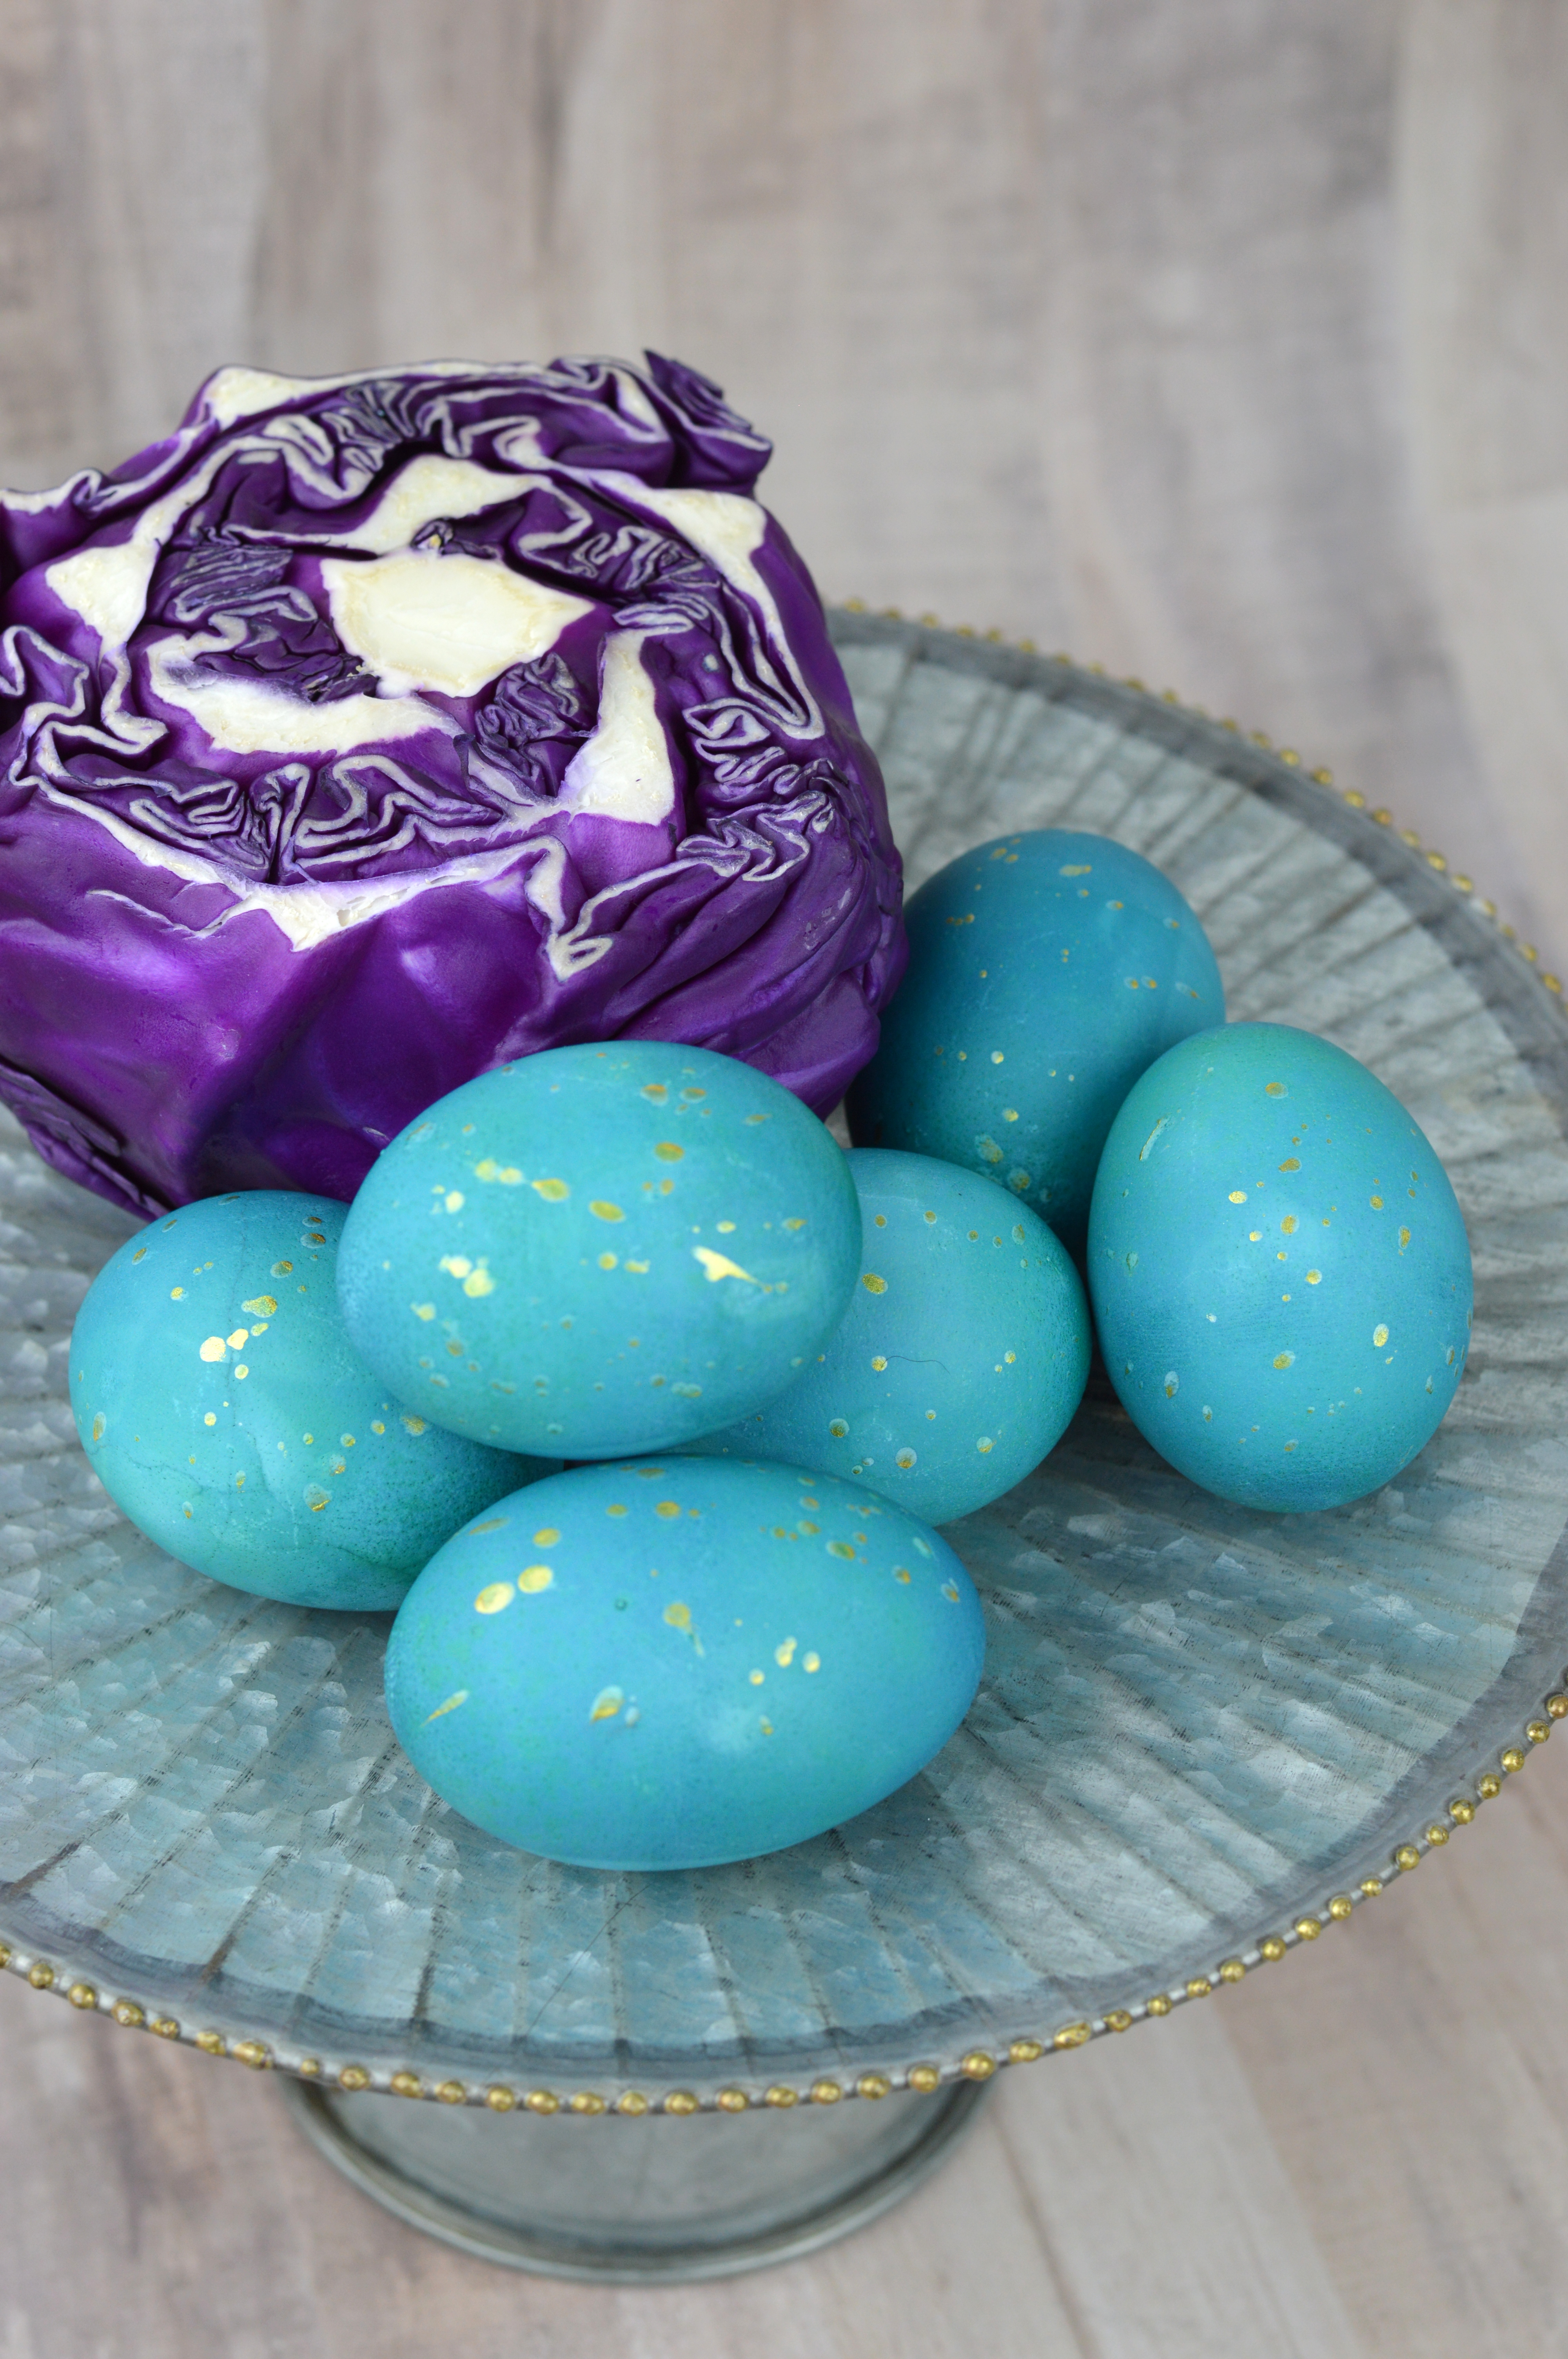 DIY Natural Dye Easter Eggs - My Big Fat Happy Life